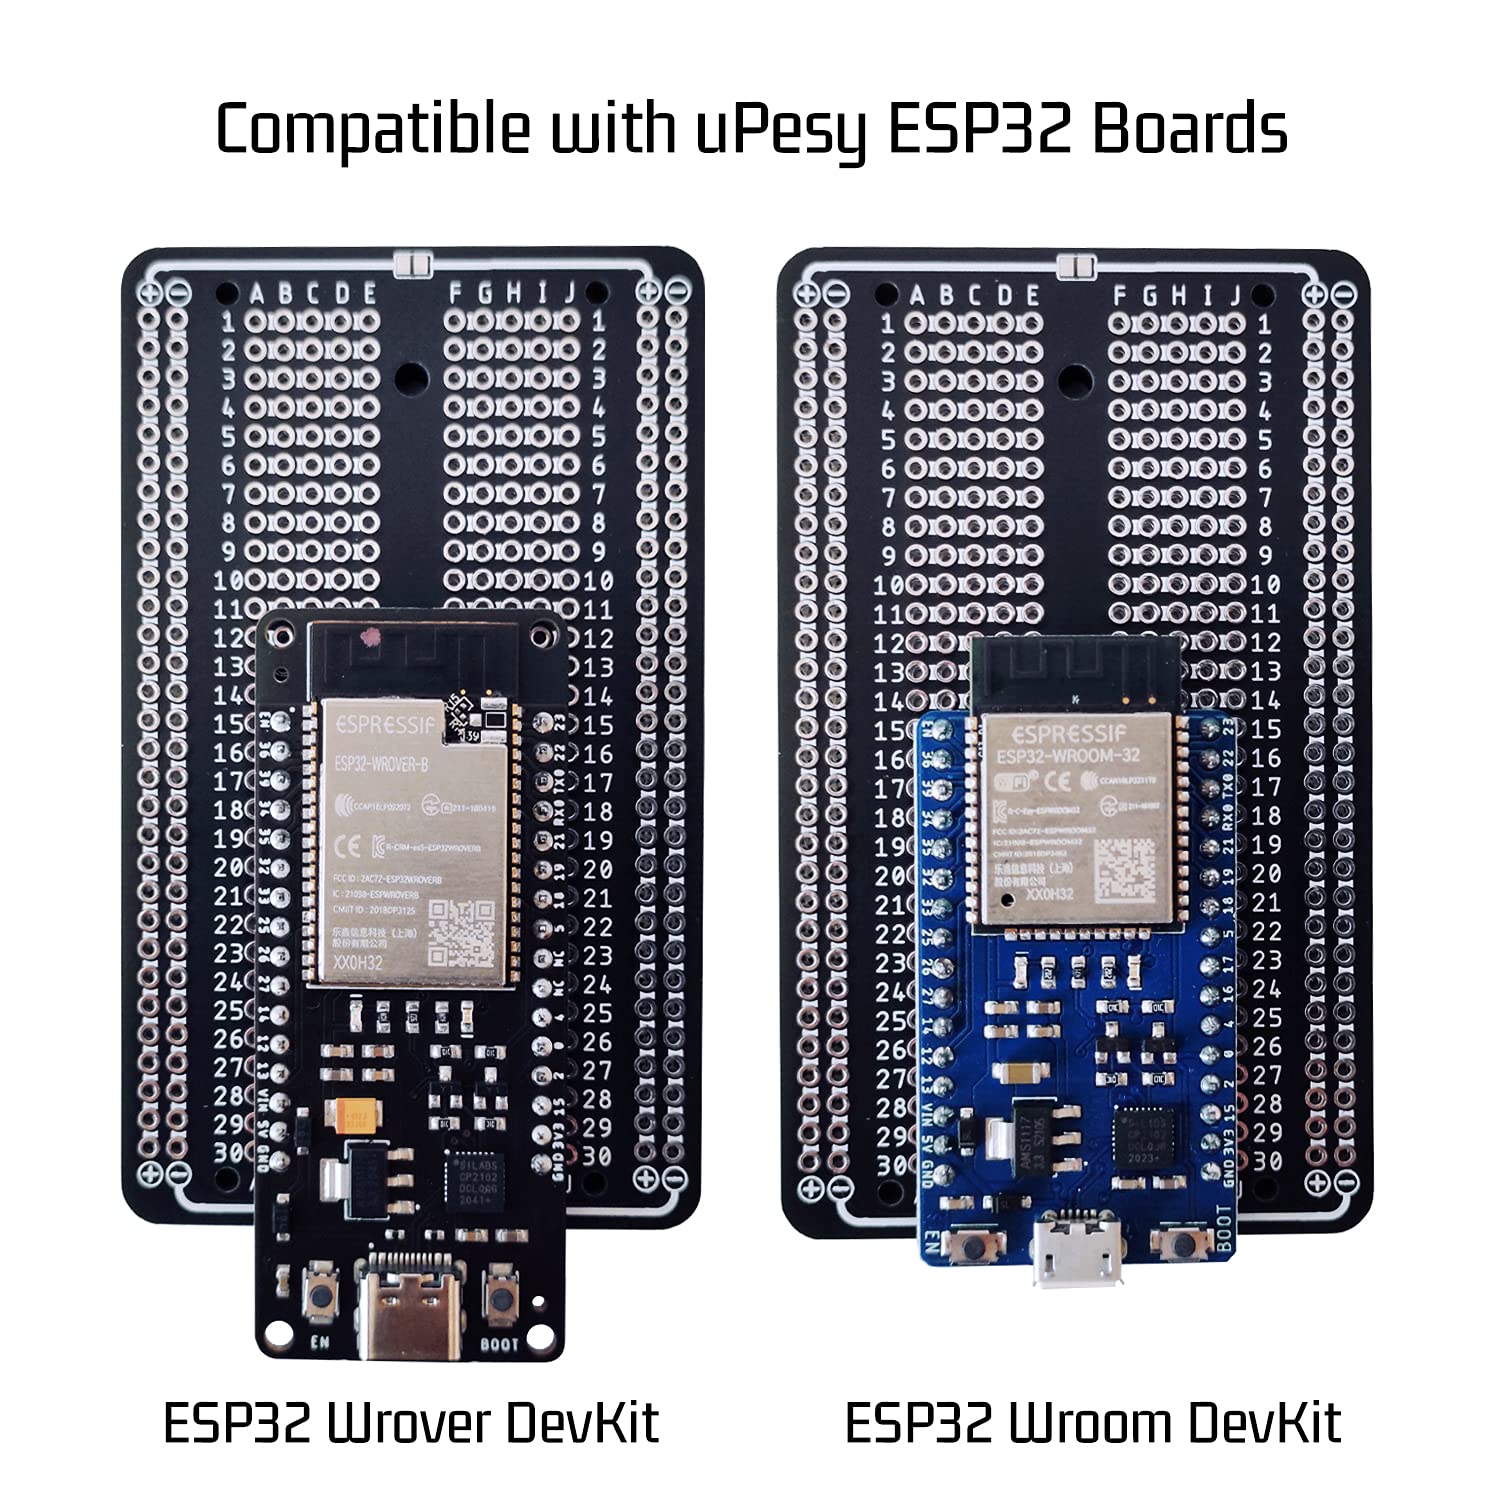 les cartes esp32 d'upesy sont compatibles avec les cartes de prototypages upesy